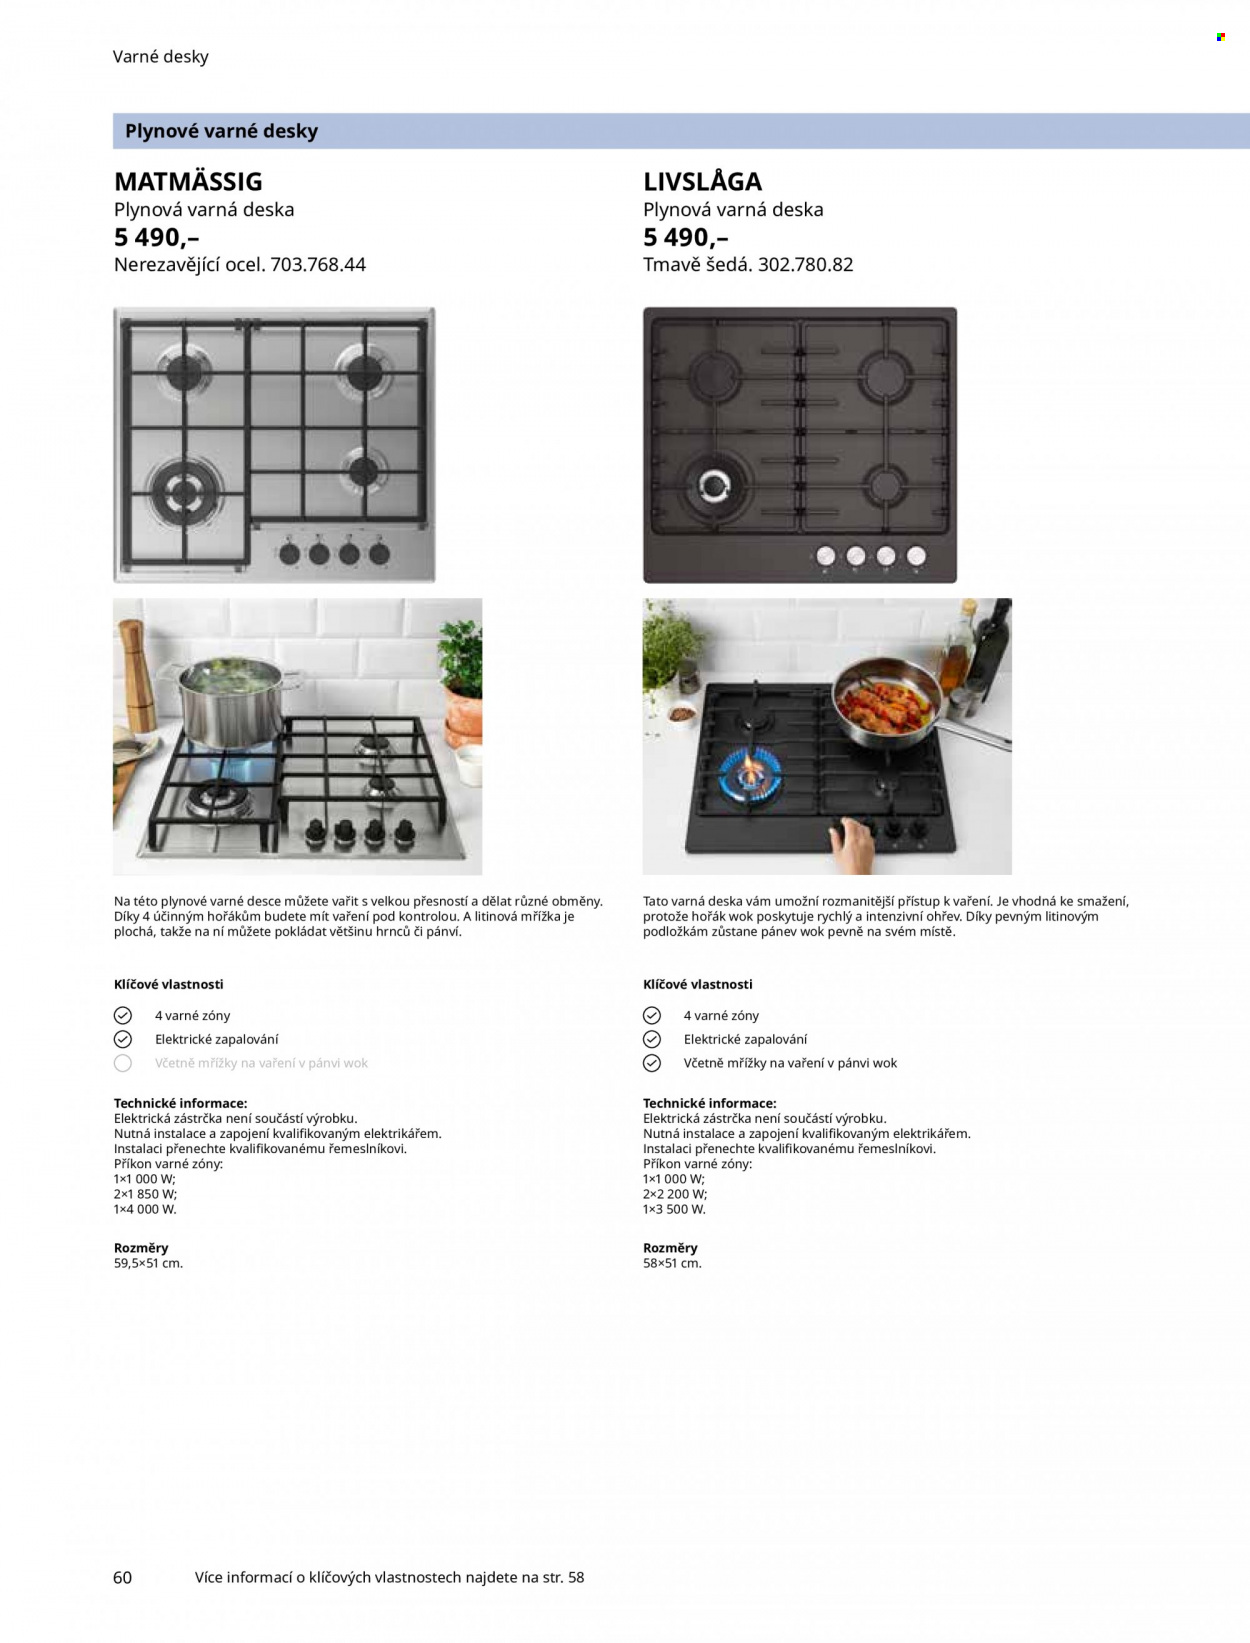 thumbnail - Leták IKEA - Produkty v akci - pánev, pánev wok, plynová varná deska, varná deska. Strana 60.